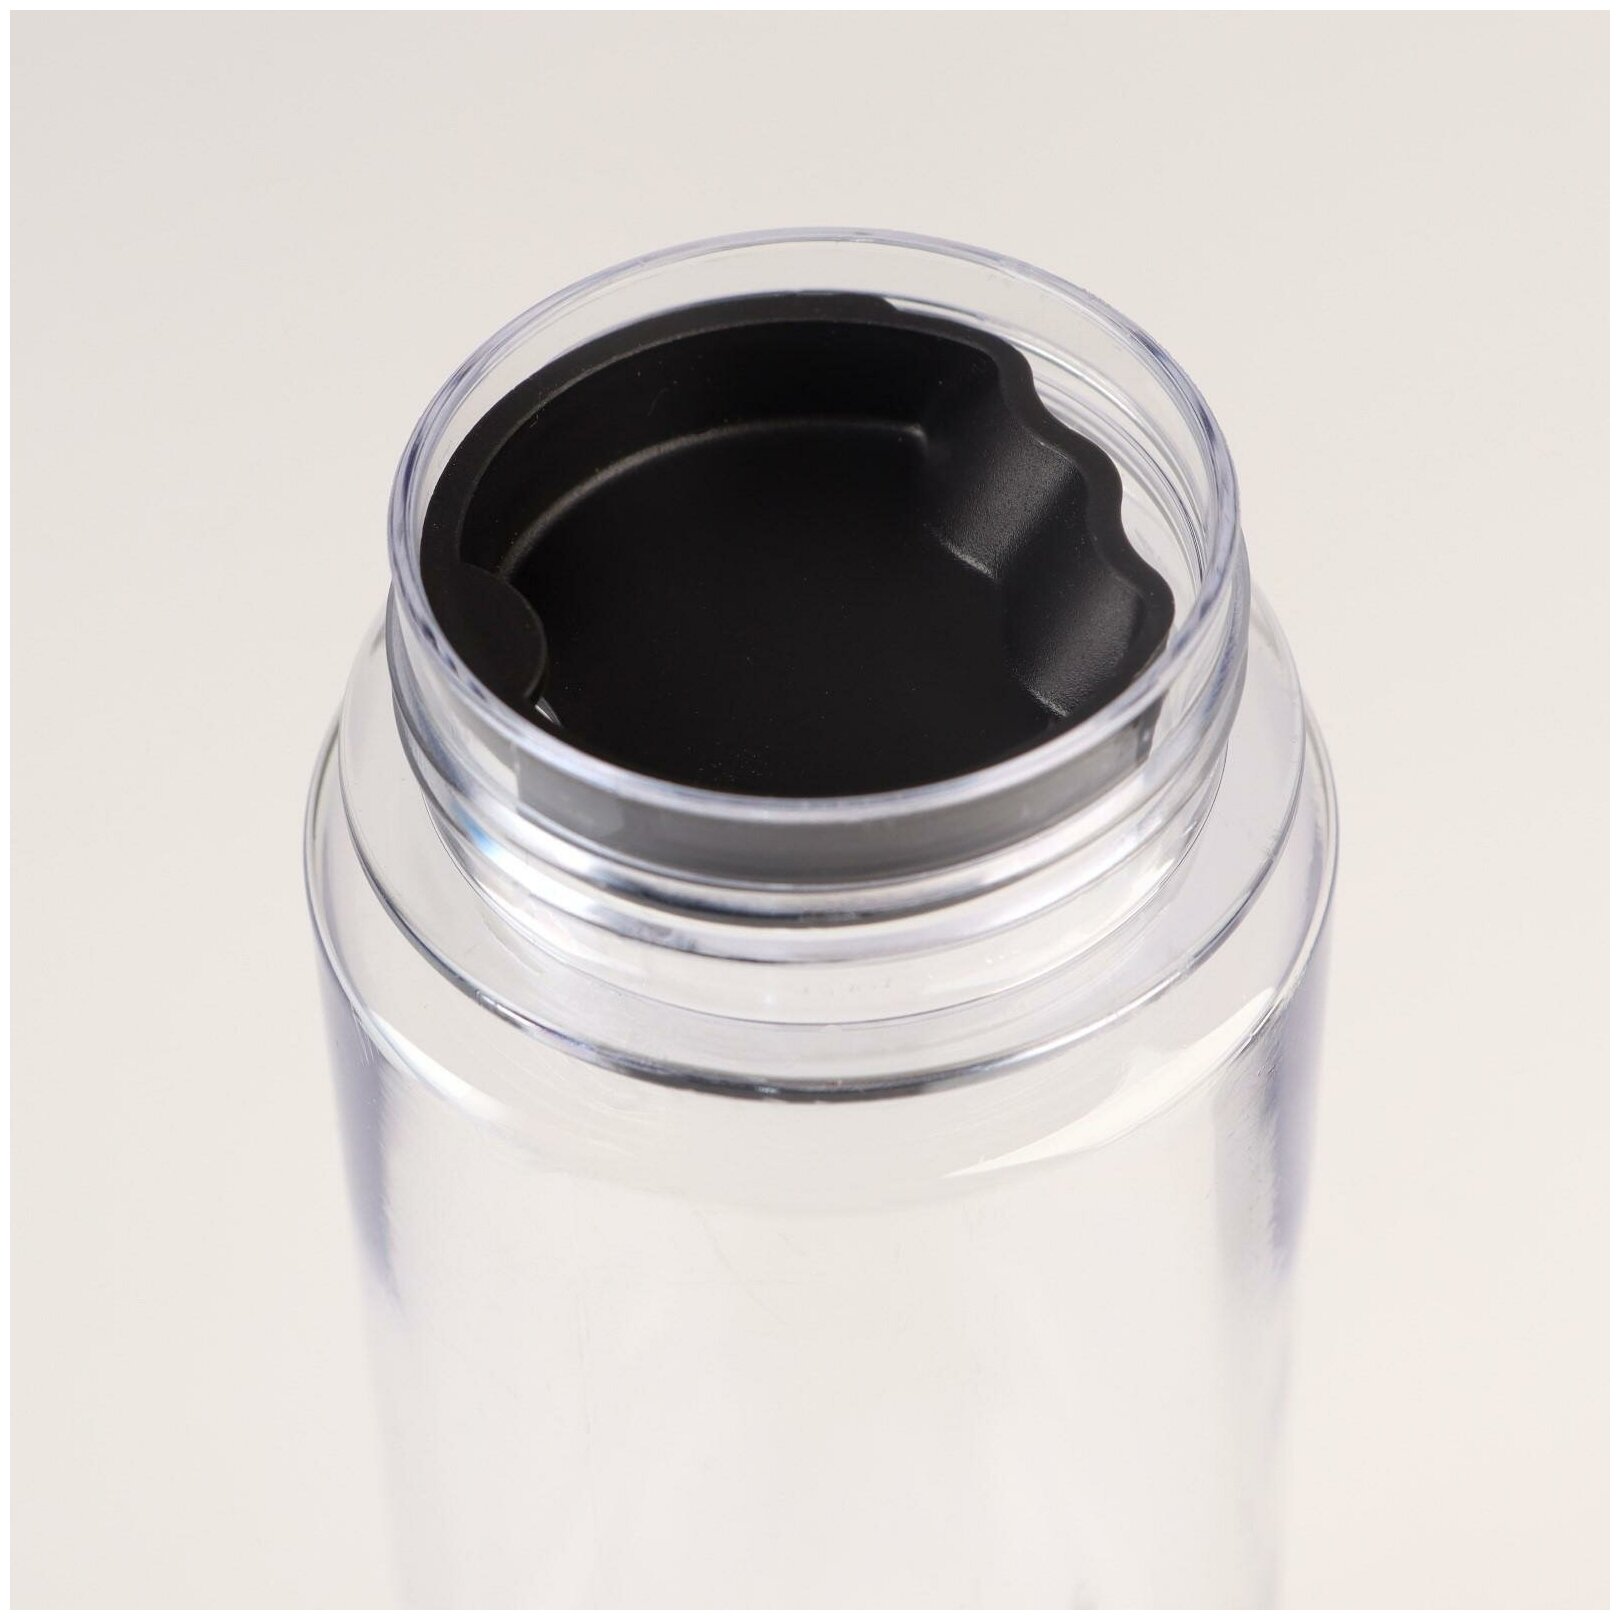 Бутылка для воды "My bottle", объем 500 мл, размер 19 х 6.5 см, цвет черный - фотография № 3